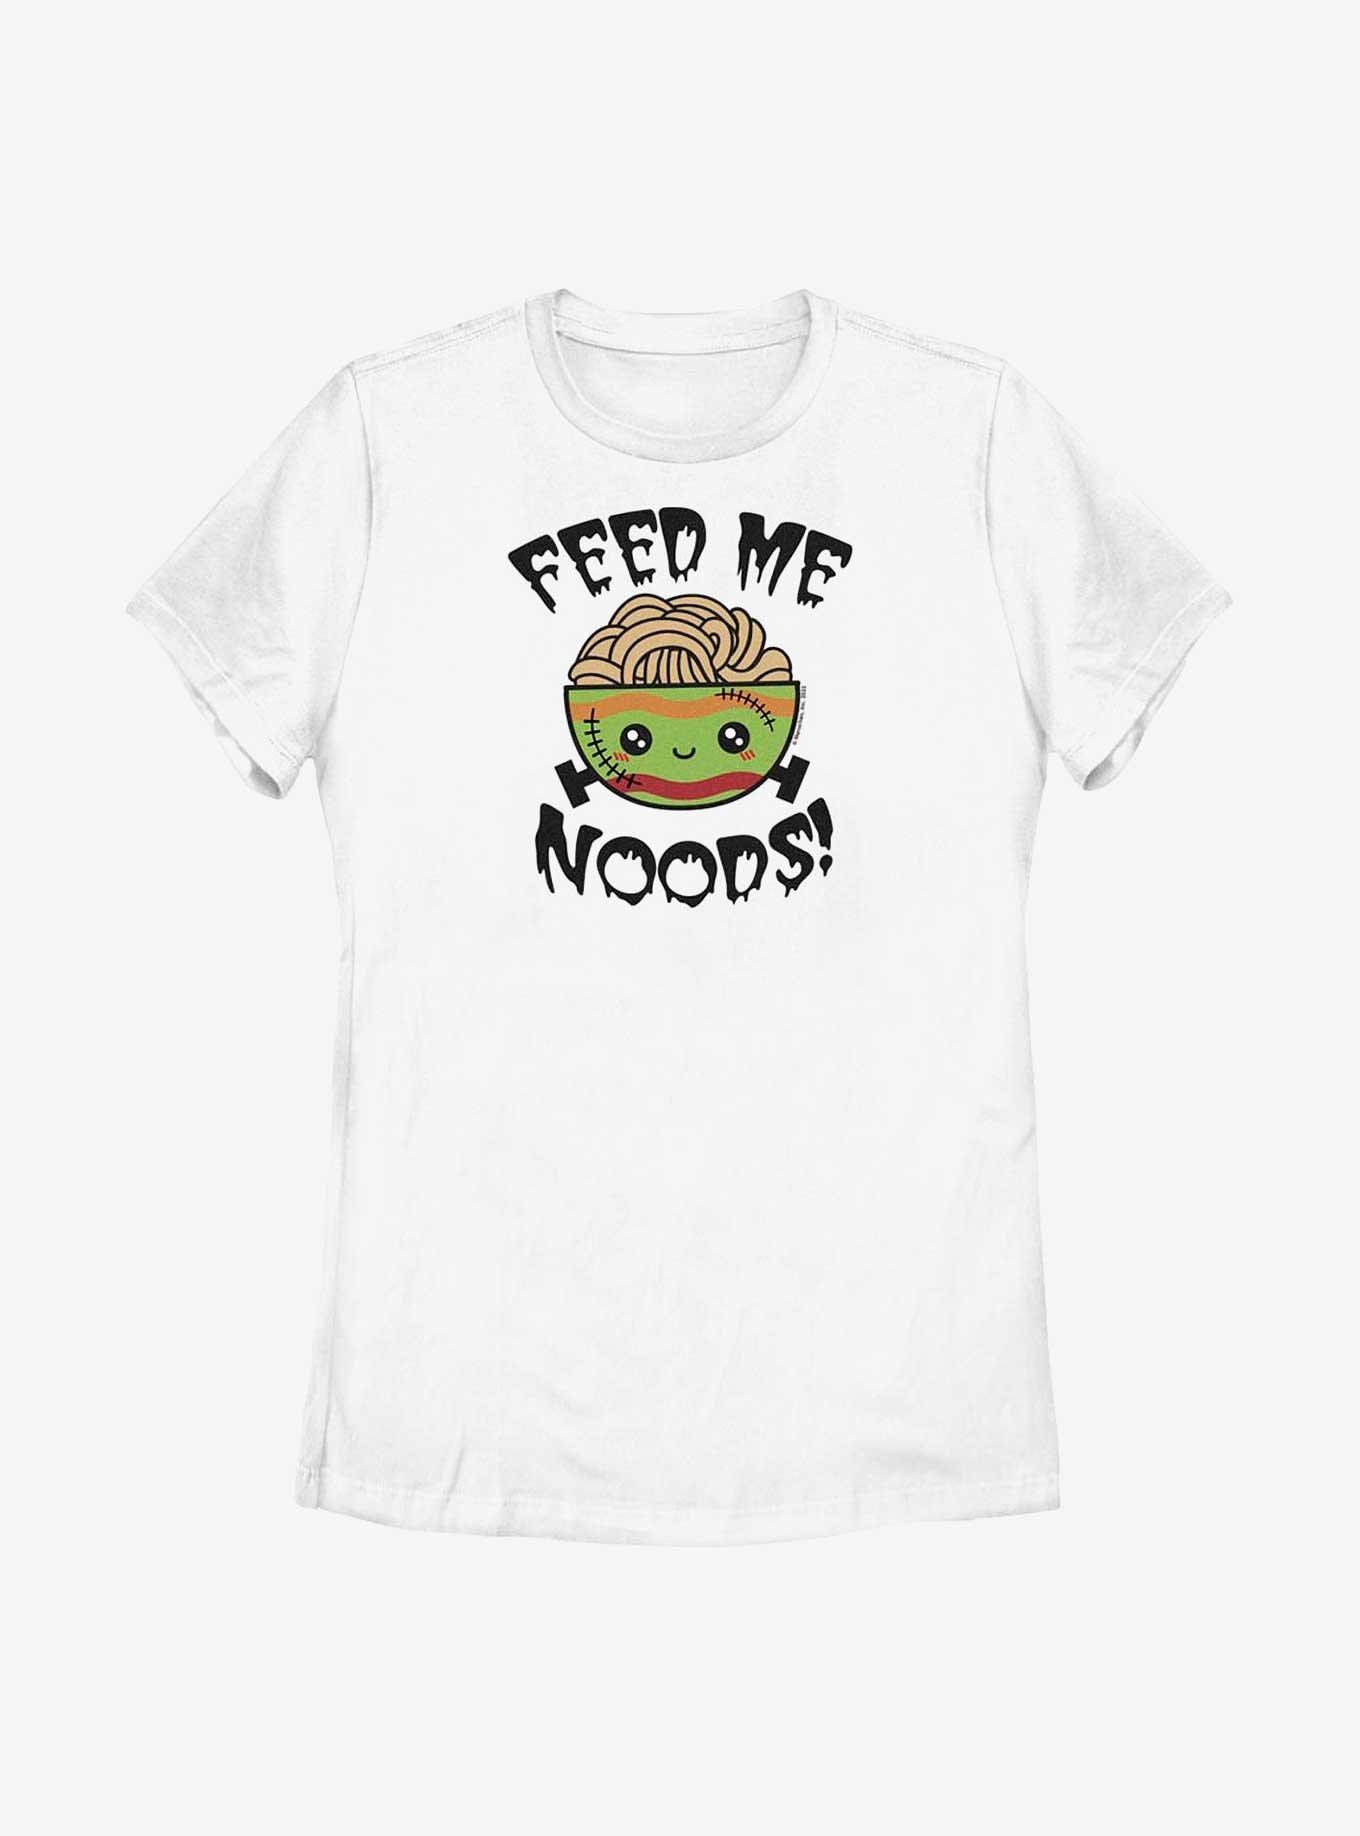 Maruchan Feed Me Noods Womens T-Shirt, WHITE, hi-res